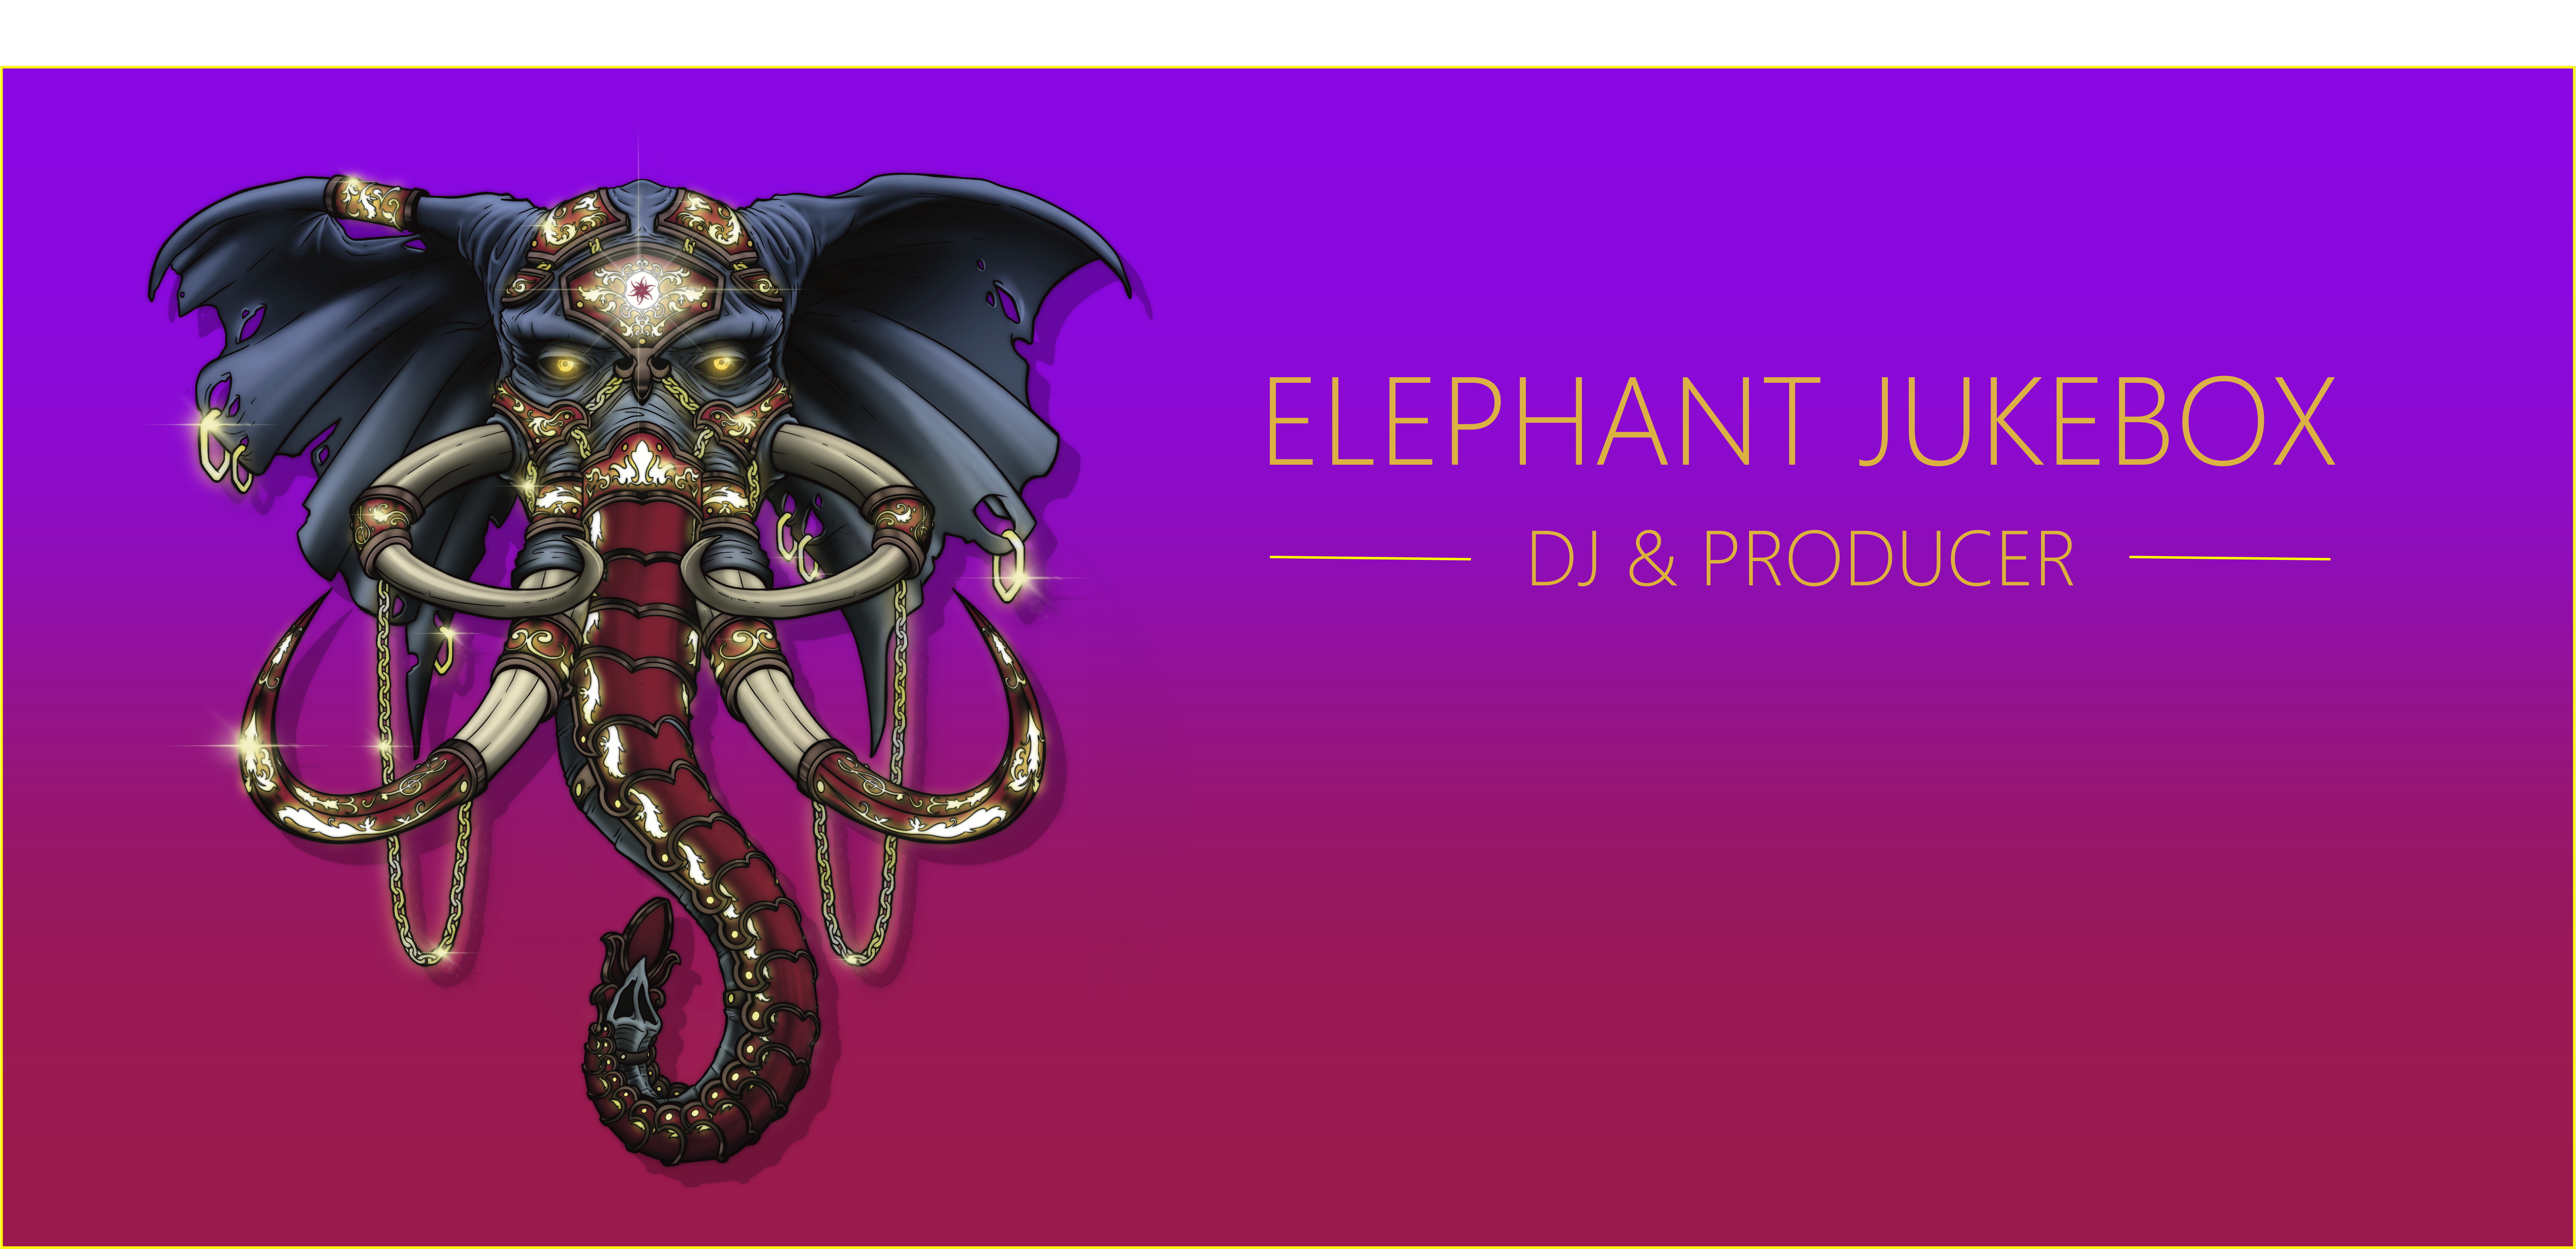 Elephant jukebox: by Collin Stone - Producer & Dj